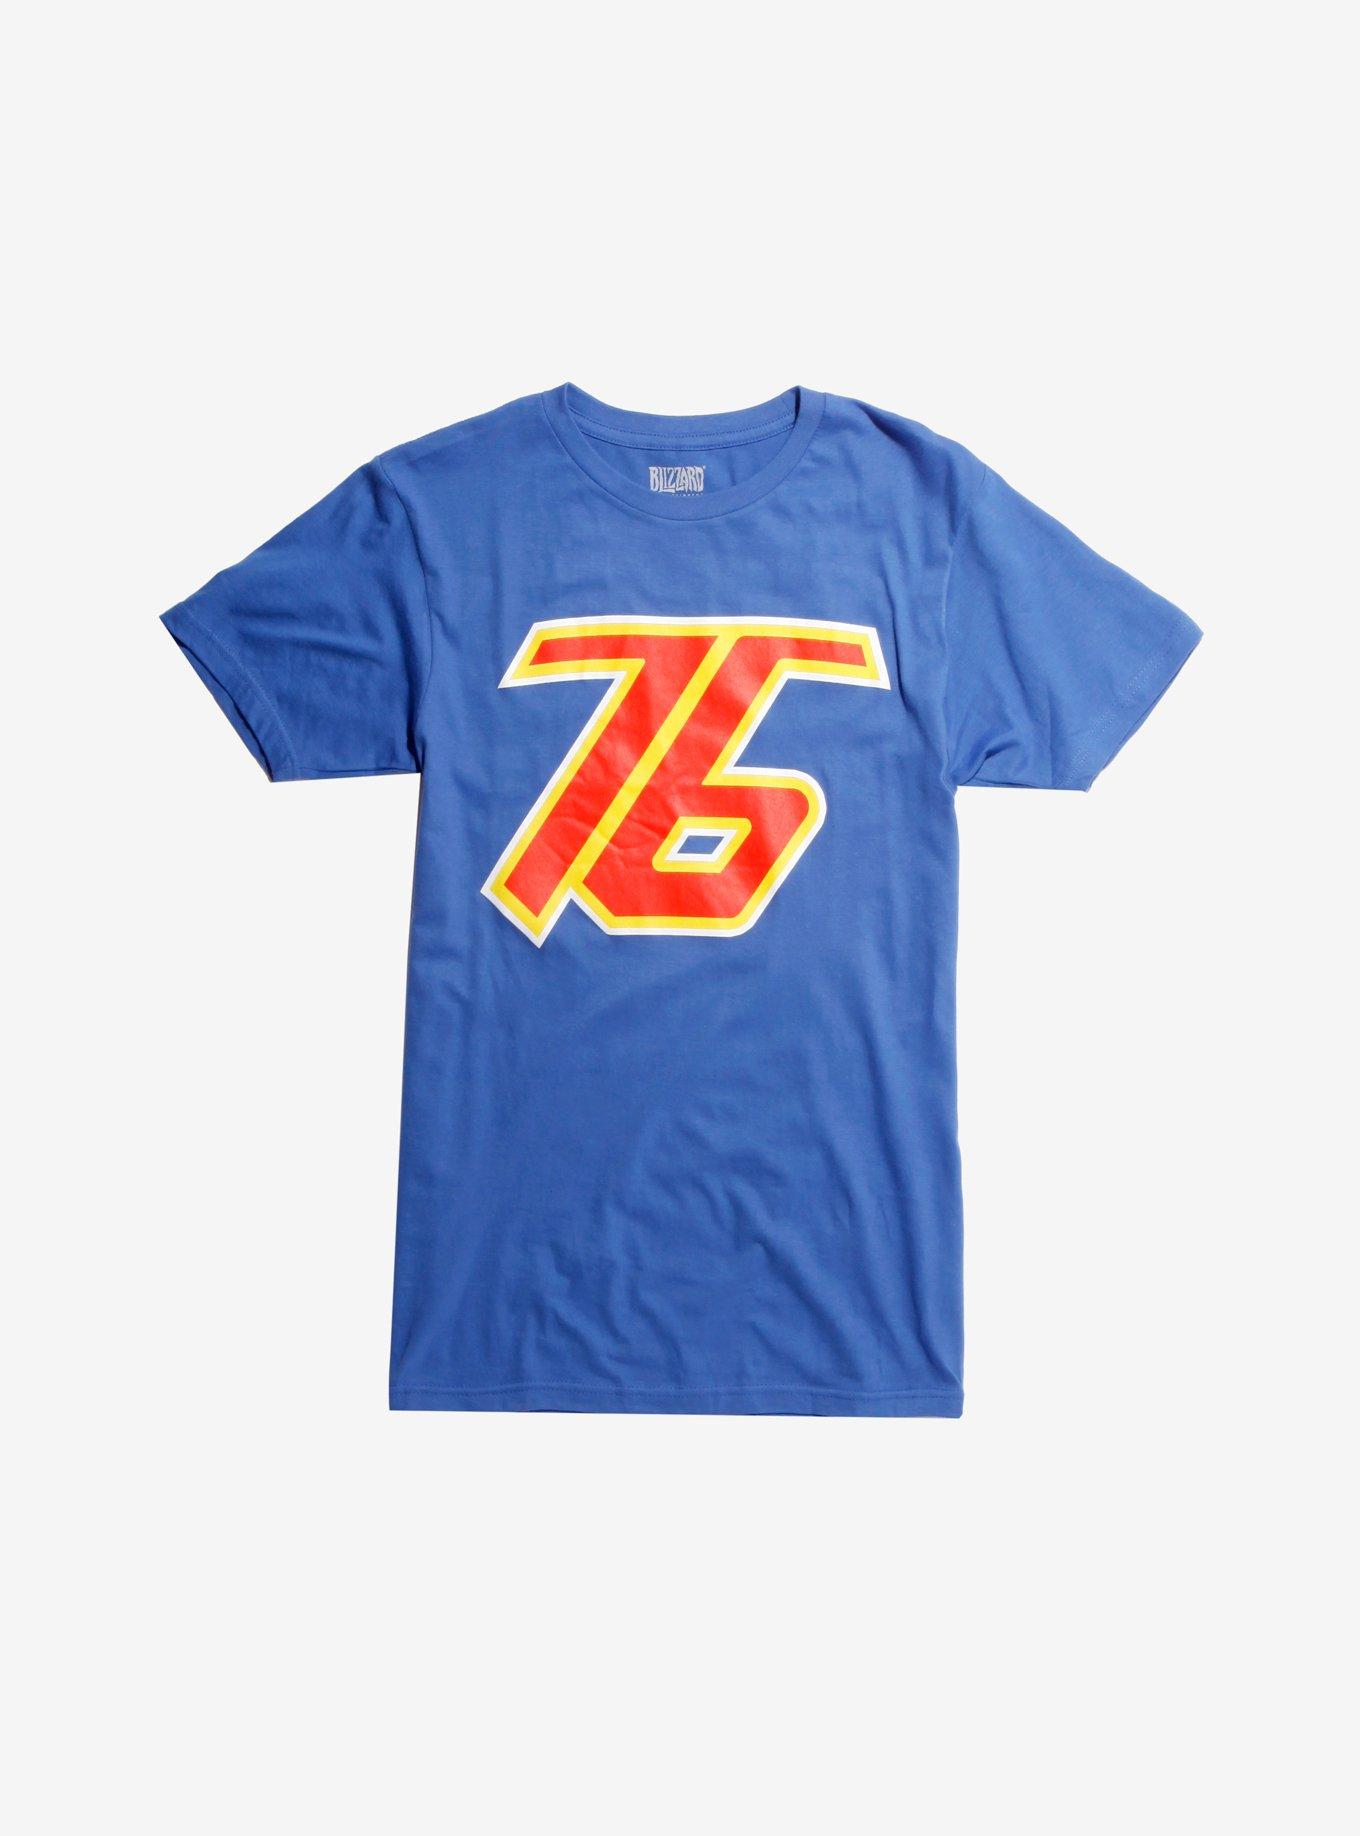 Overwatch Soldier: 76 Logo T-Shirt, BLUE, hi-res